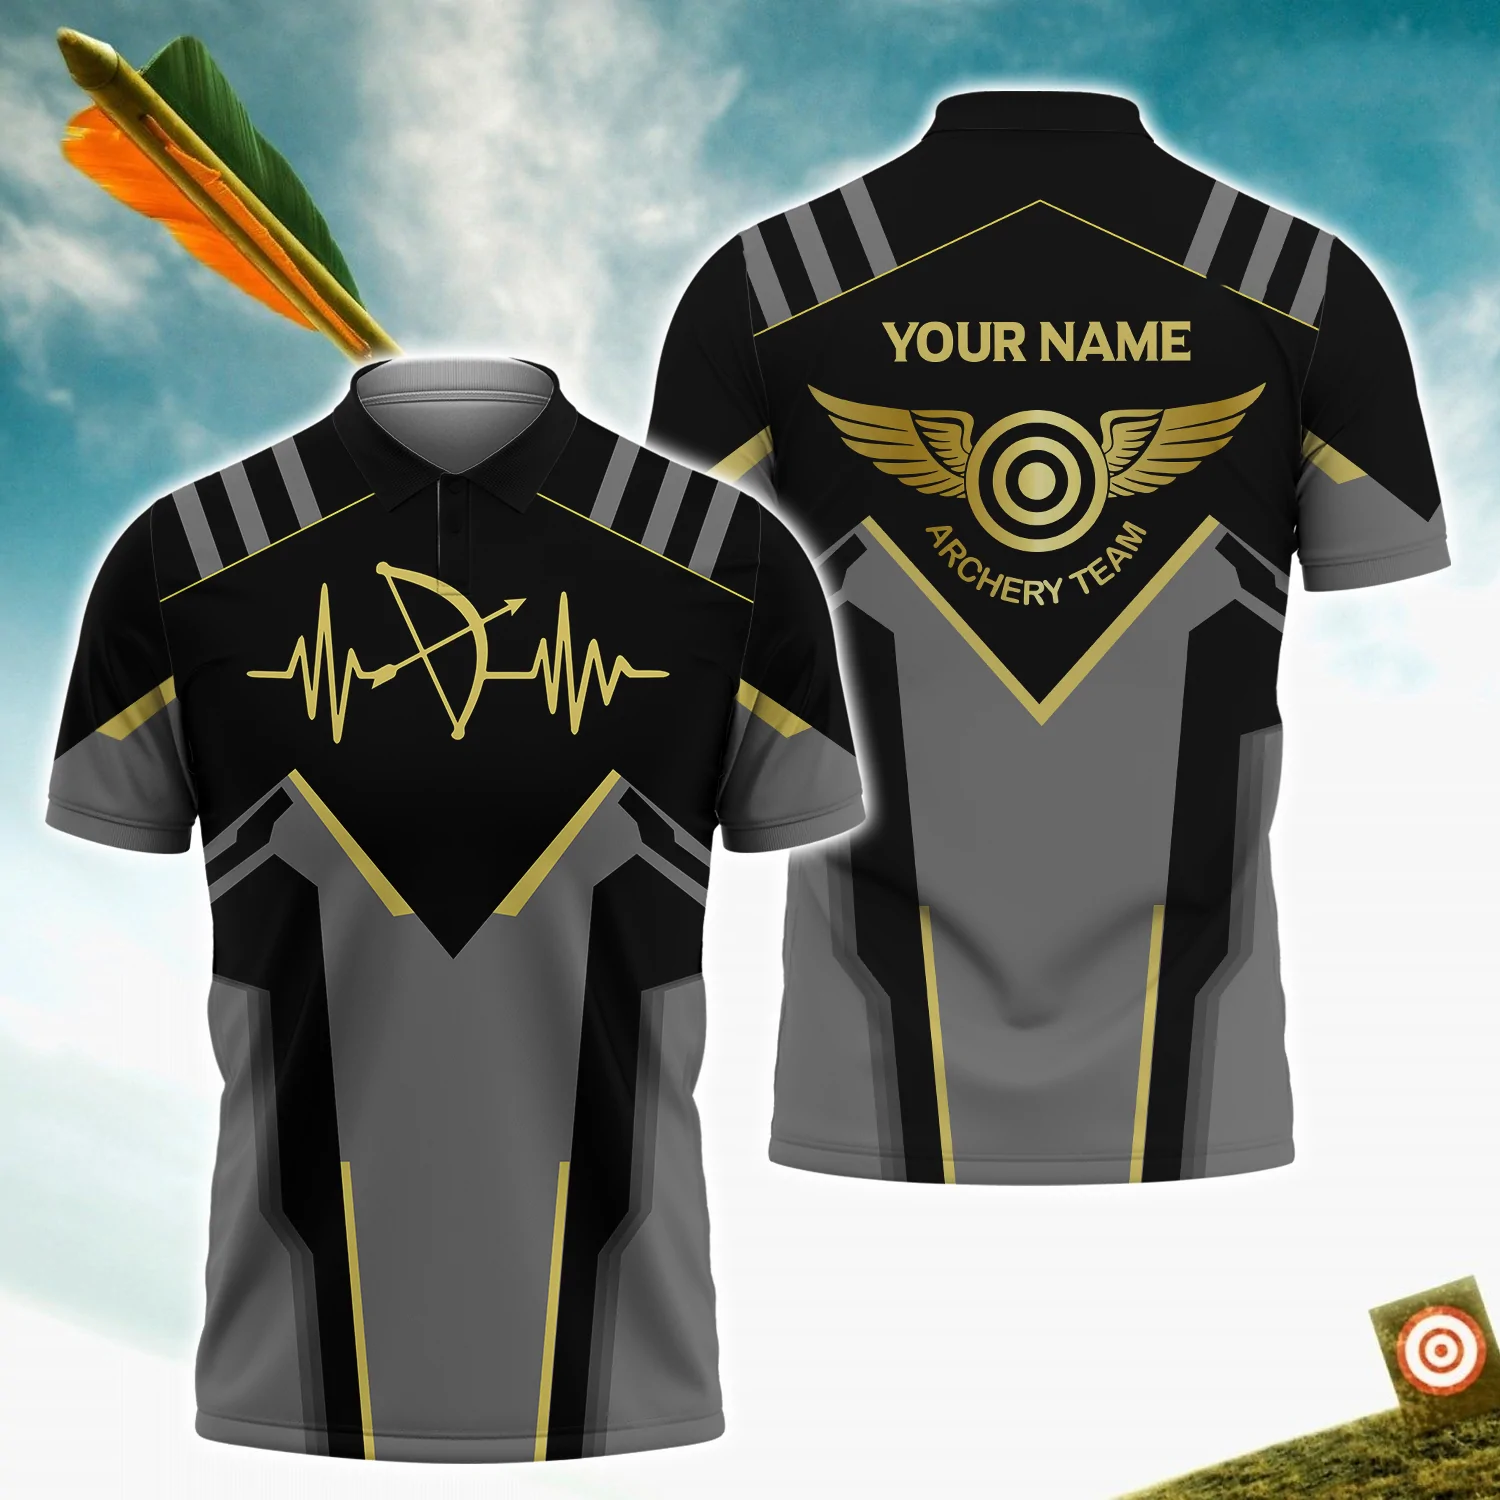 Personalized Name Archery Polo Shirt Unisex Men/ Women/ Archery In My Heart/ Archery Shirt